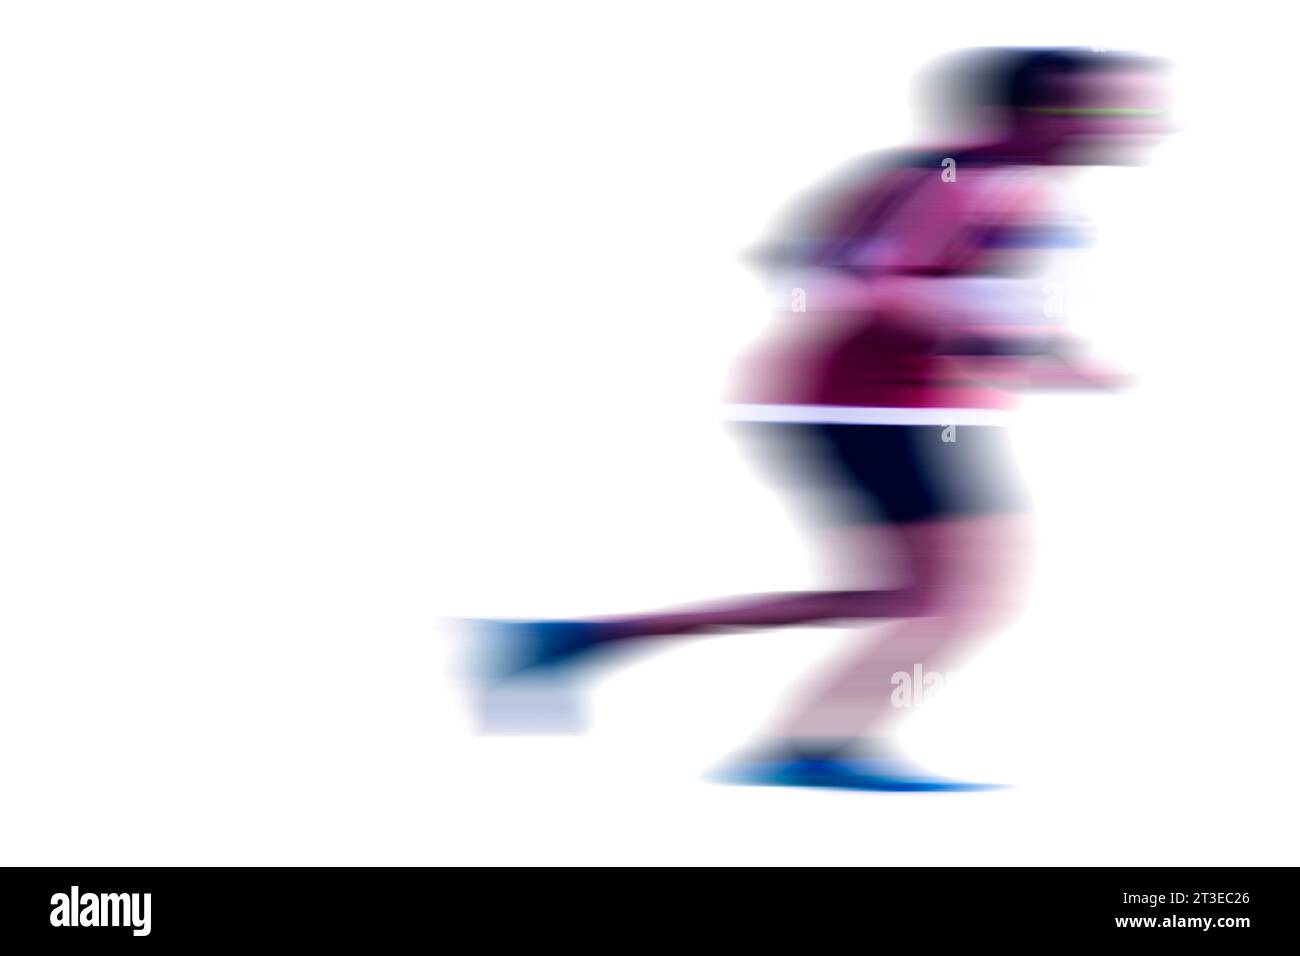 Blurred runner on white background. Stock Photo